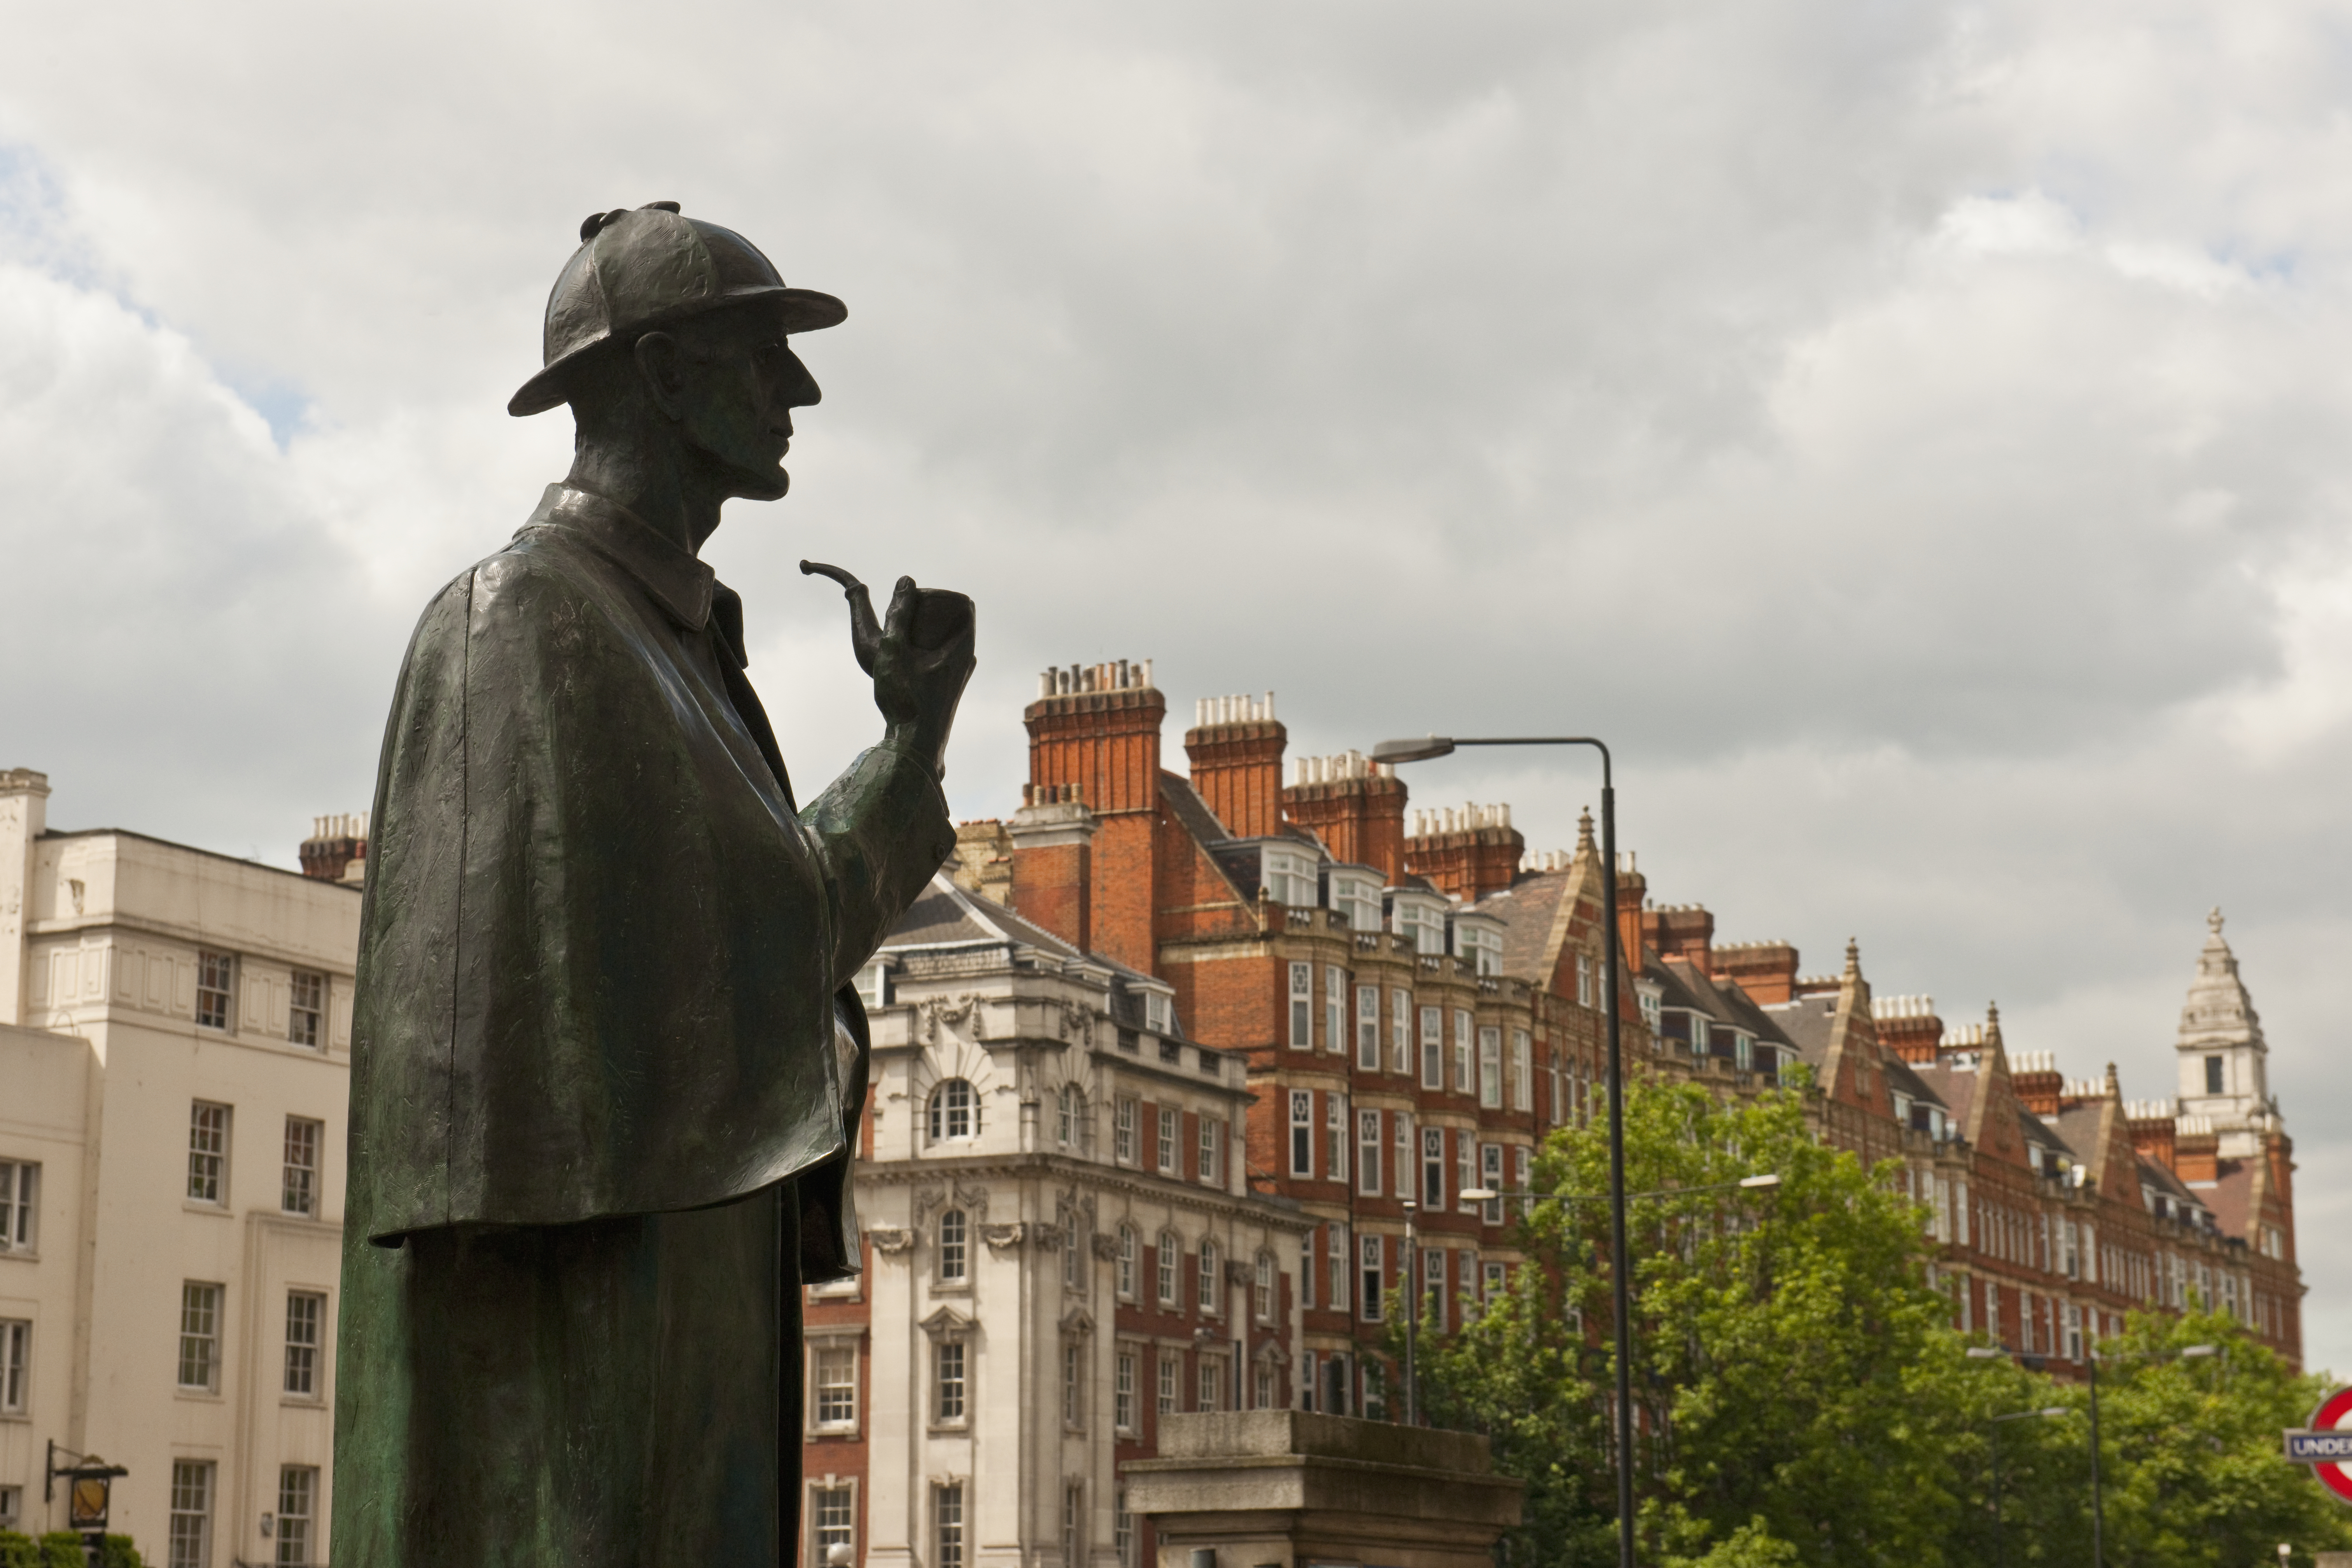 The statue of Sherlock Holmes in London.